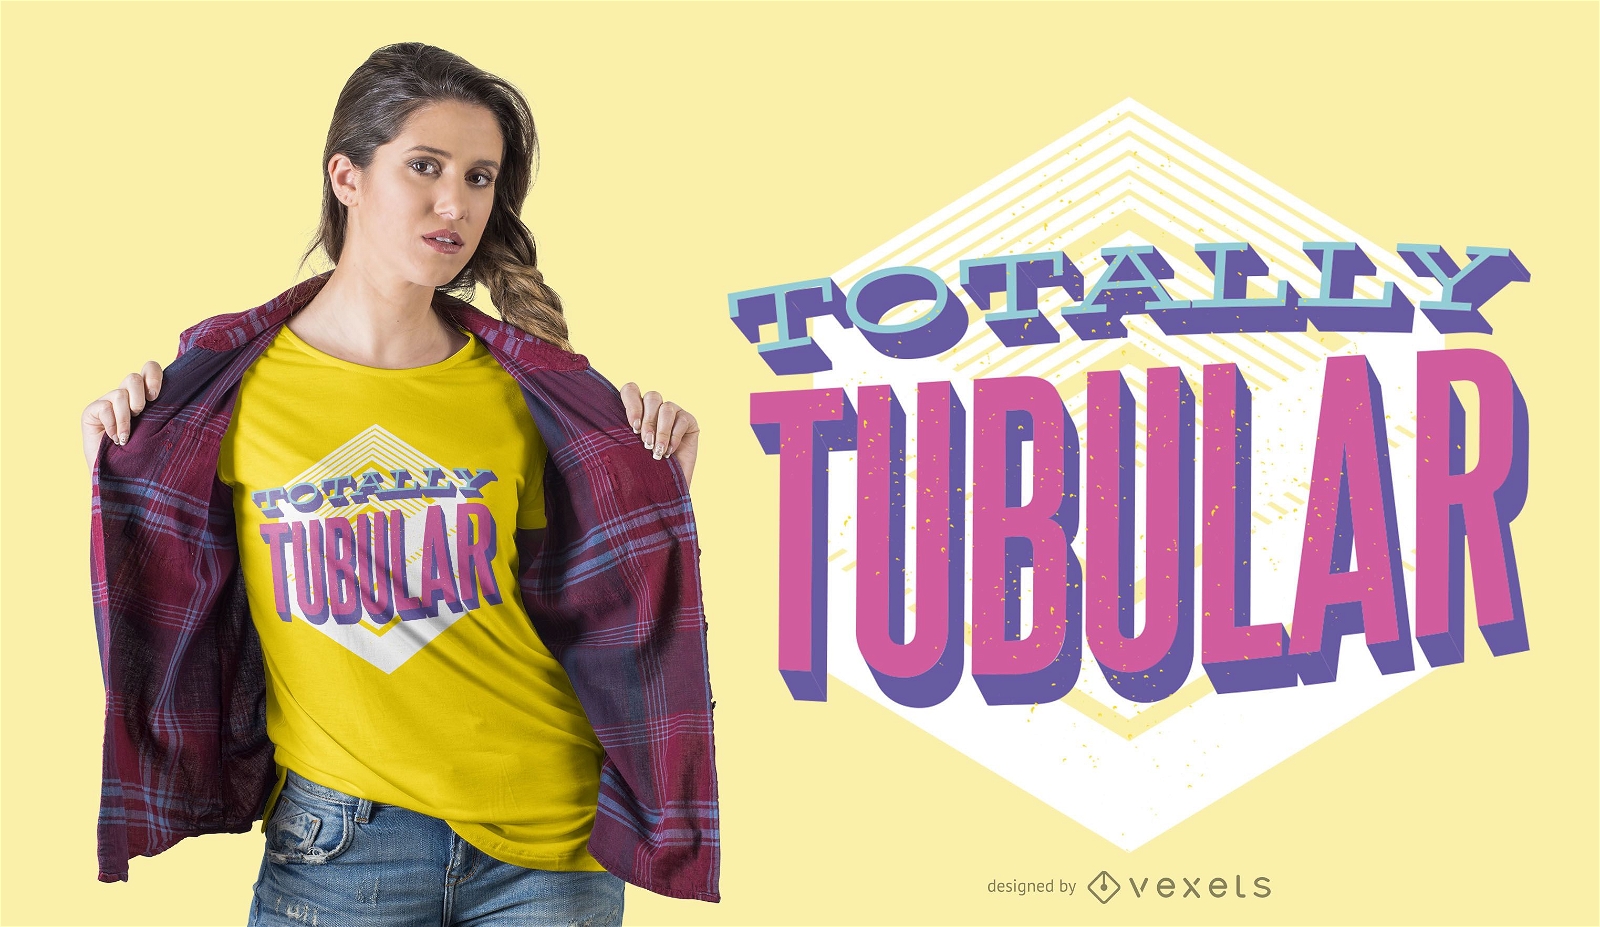 Totally tubular t-shirt design